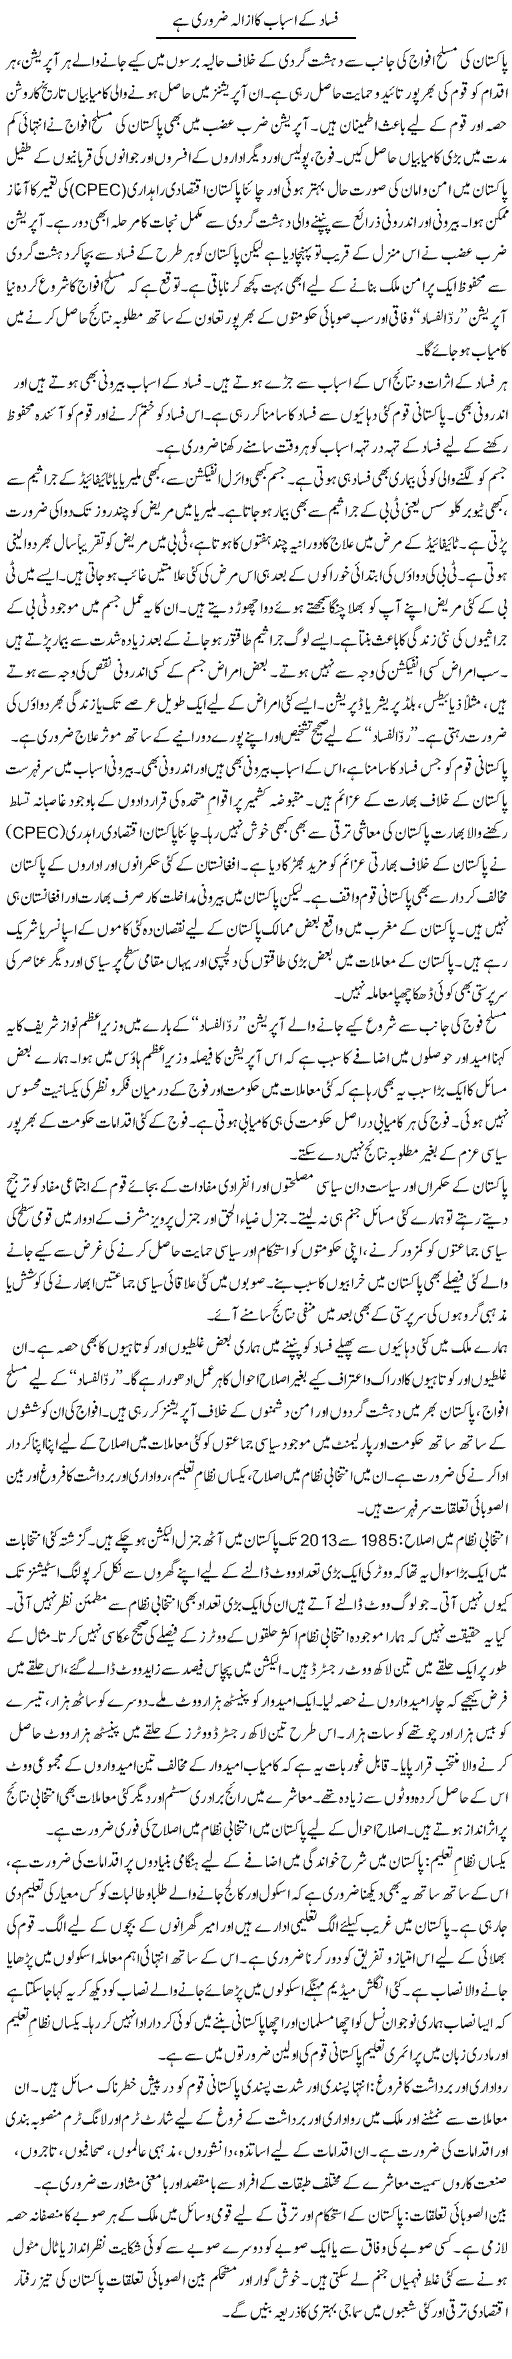 Fasad Ke Asbab Ka Azala Zaroori Hai | Dr. Waqar Yousuf Azeemi | Daily Urdu Columns